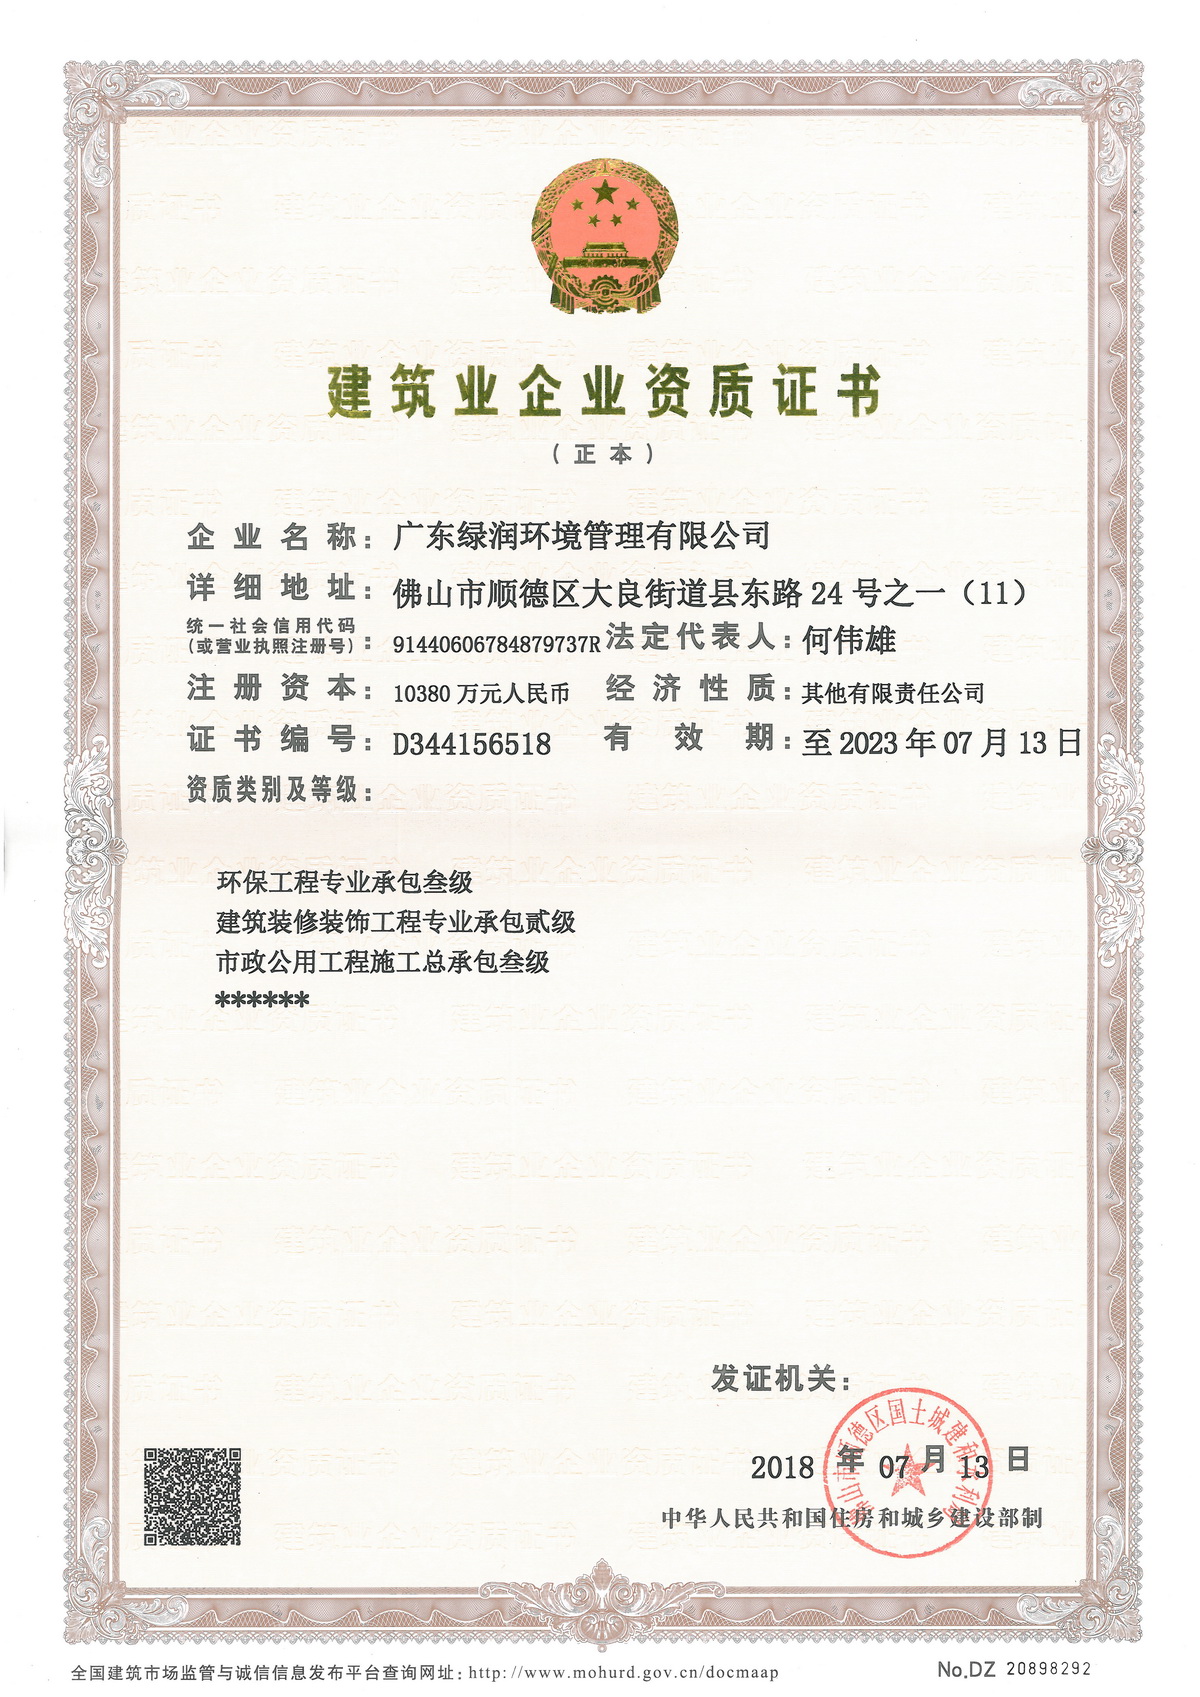 Construction Industry Qualification Certificate-Original (Level 3 Environmental Protection, Level 2 Construction, Level 3 Municipal)